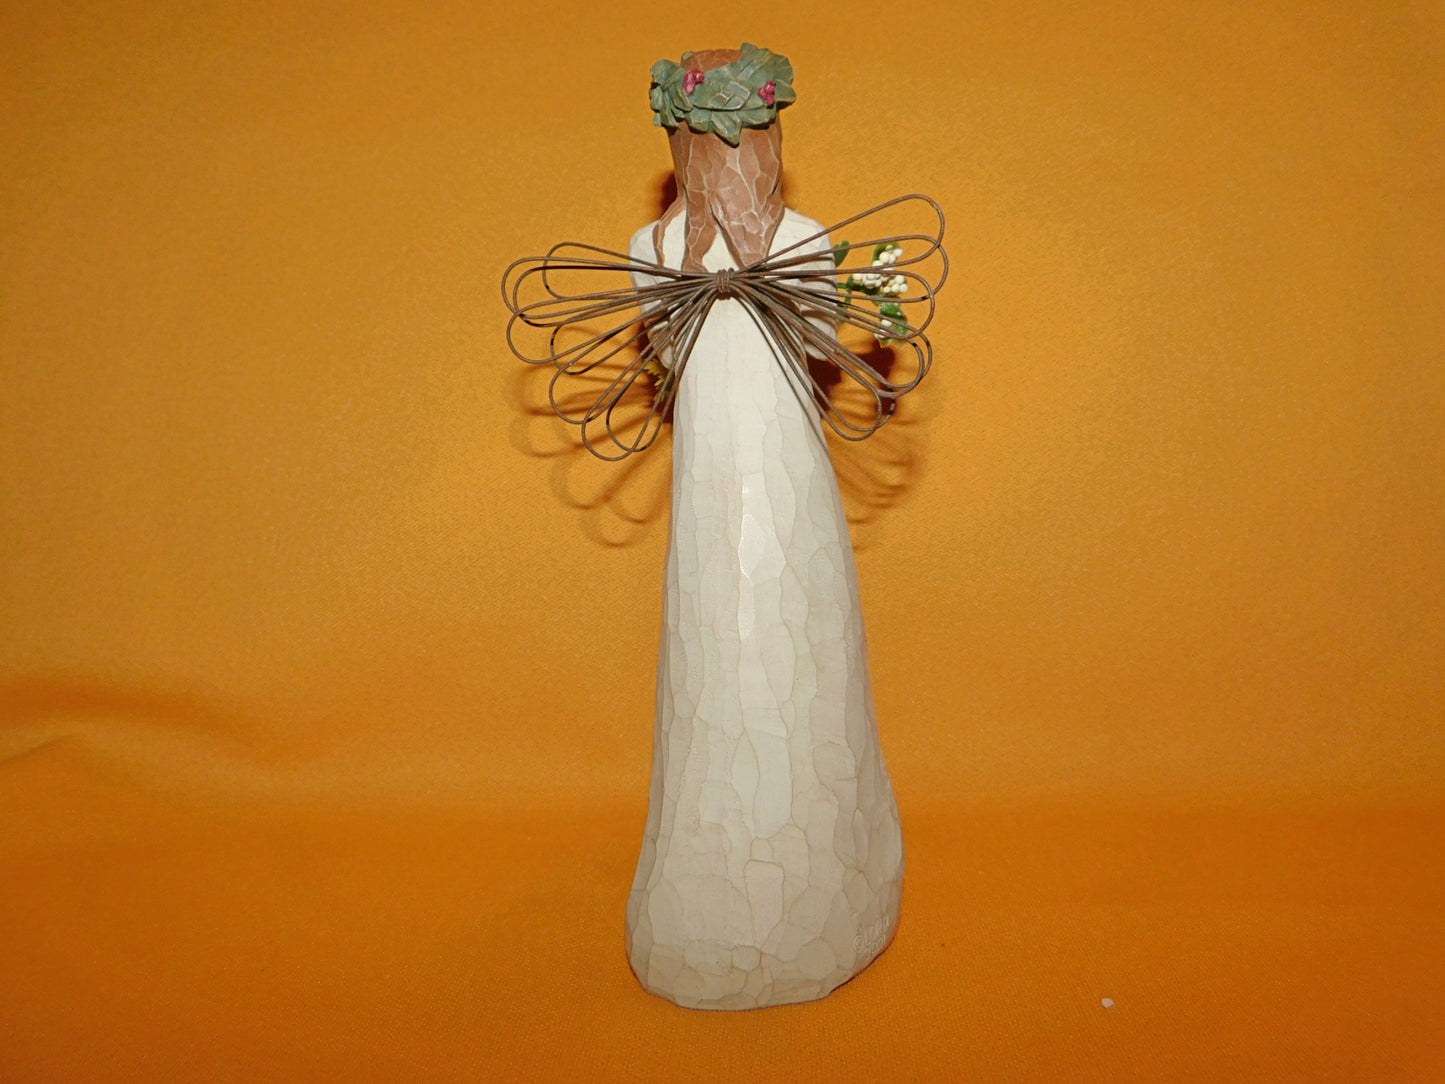 Willow Tree Angel of Christmas Spirit (2001) Susan Lordi new in box